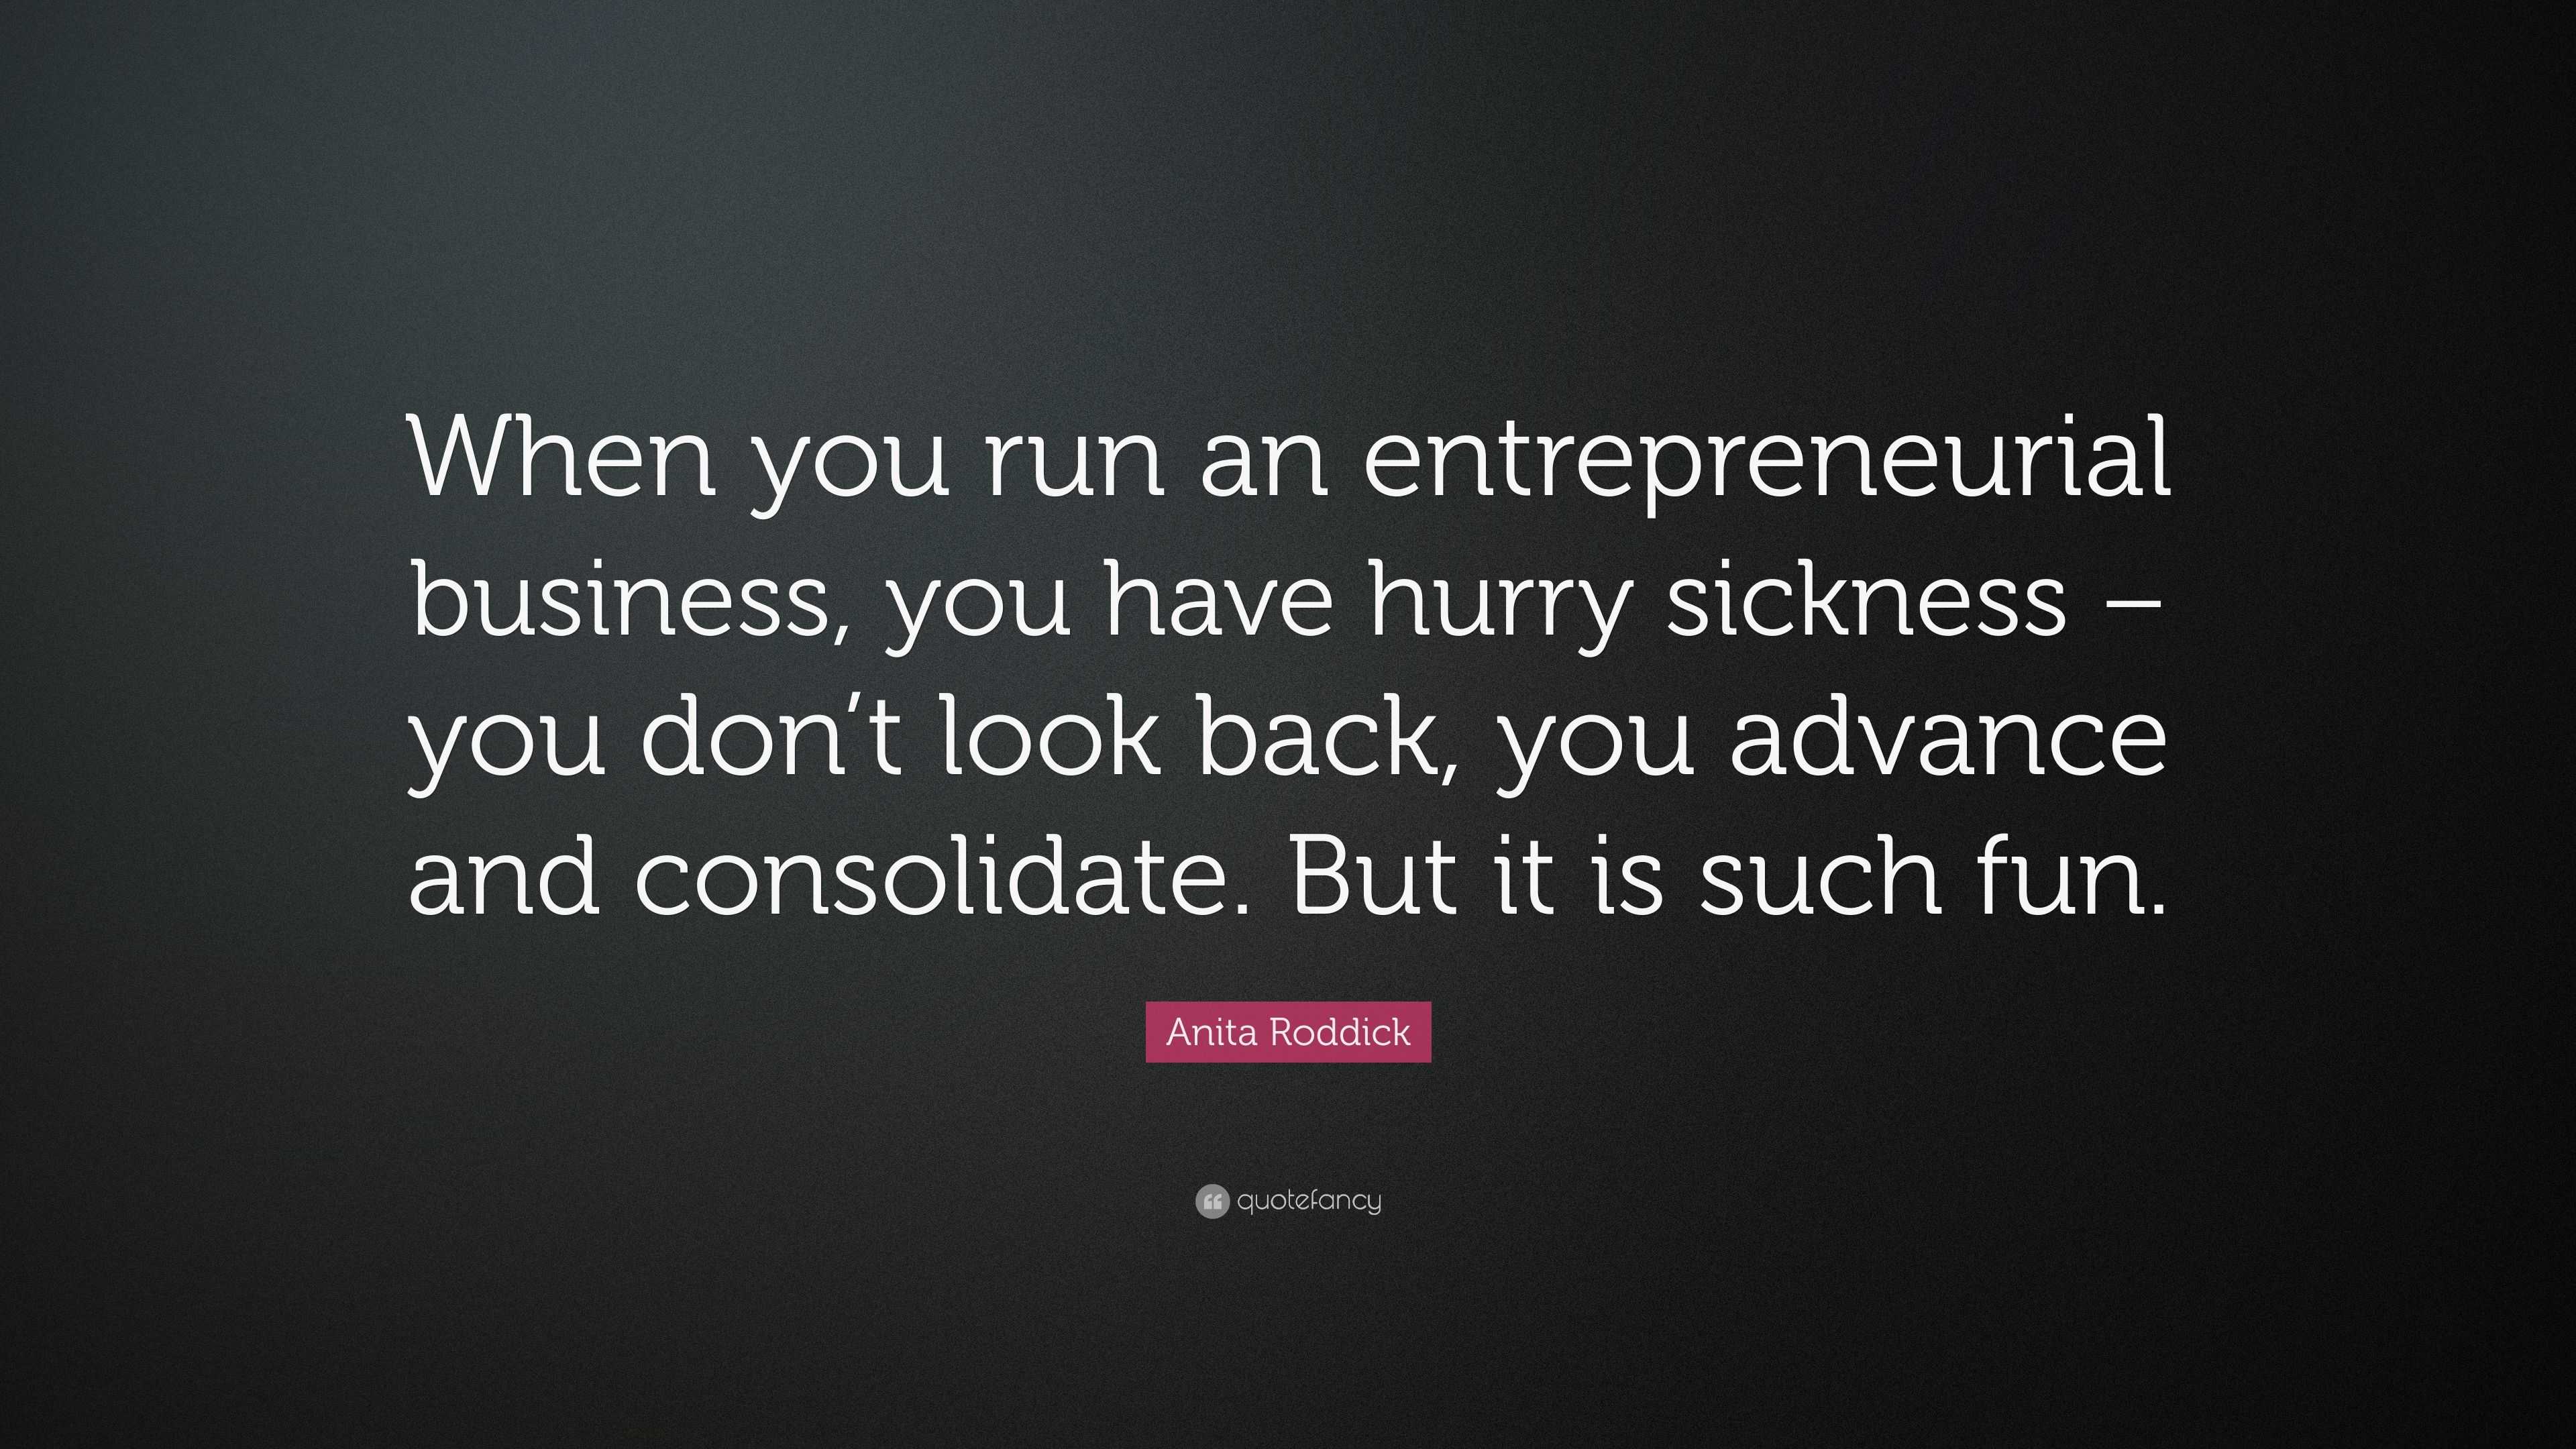 Anita Roddick Quote: “When you run an entrepreneurial business, you ...